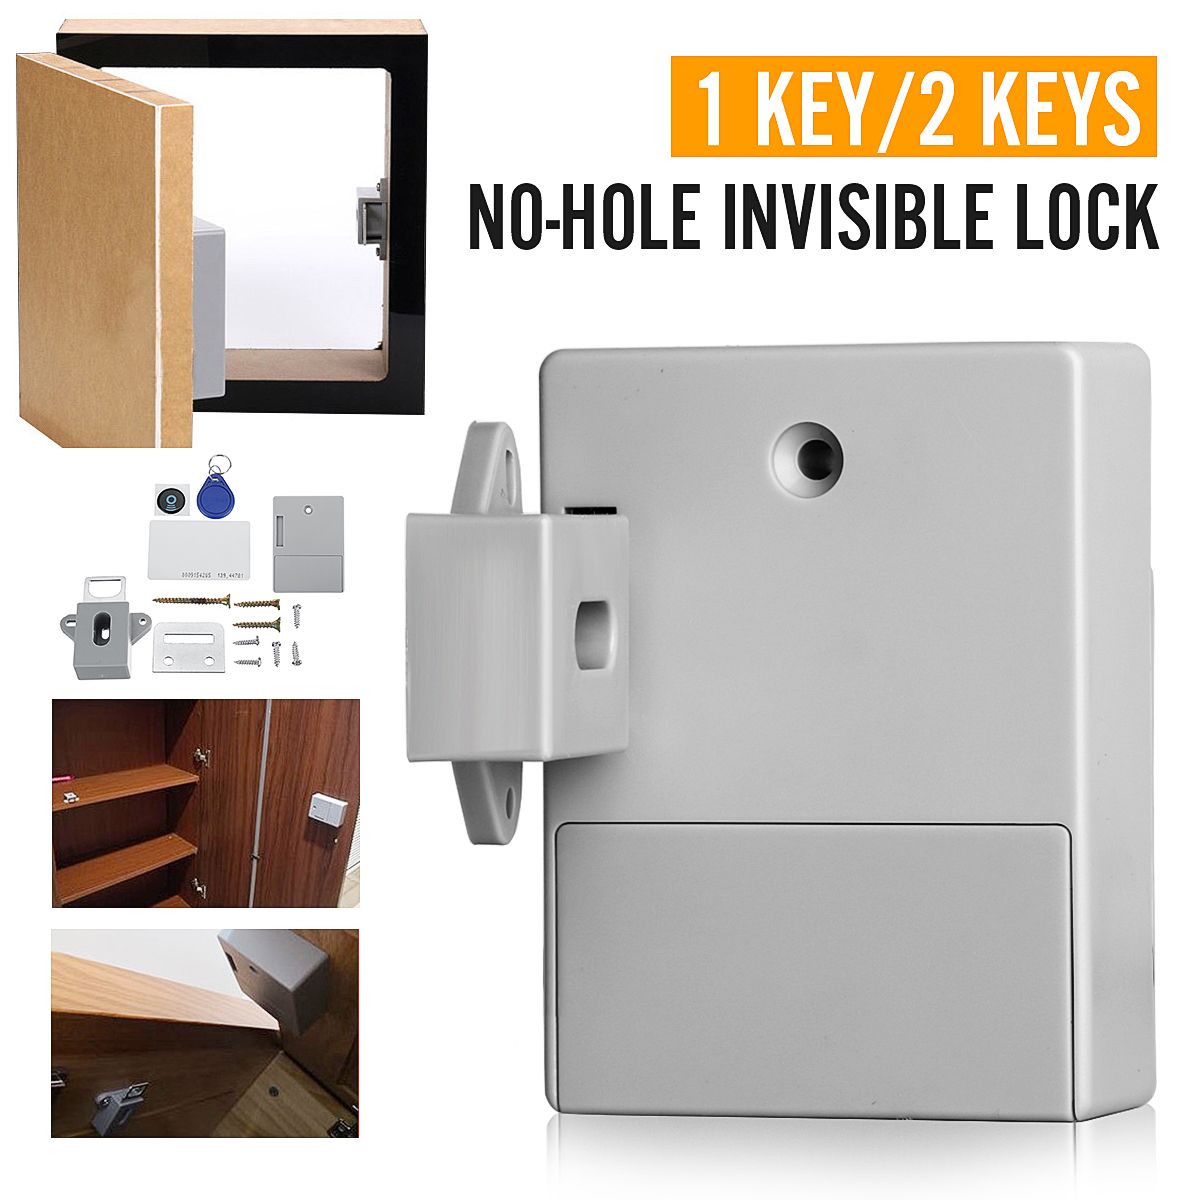 Electronic-No-hole-Invisiible-Lock-Furniture-Keyless-Door-Lock-For-Drawer-Locker-1660137